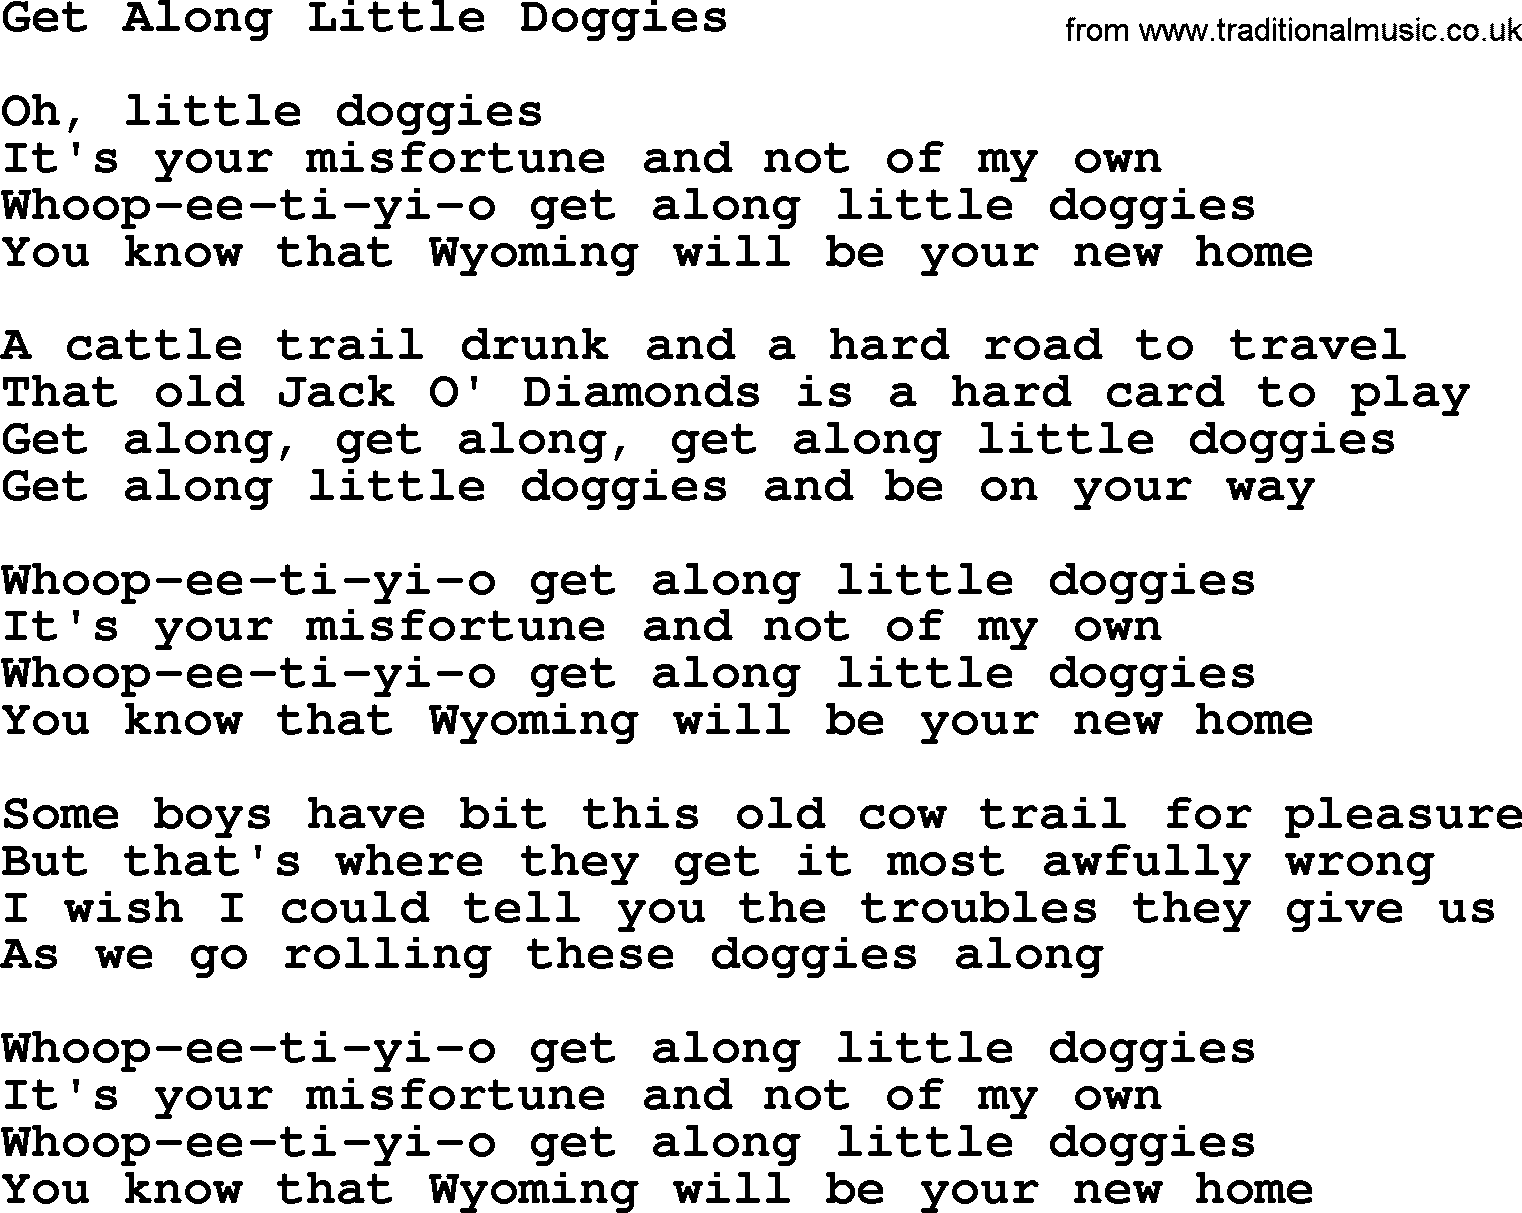 Woody Guthrie song Get Along Little Doggies lyrics